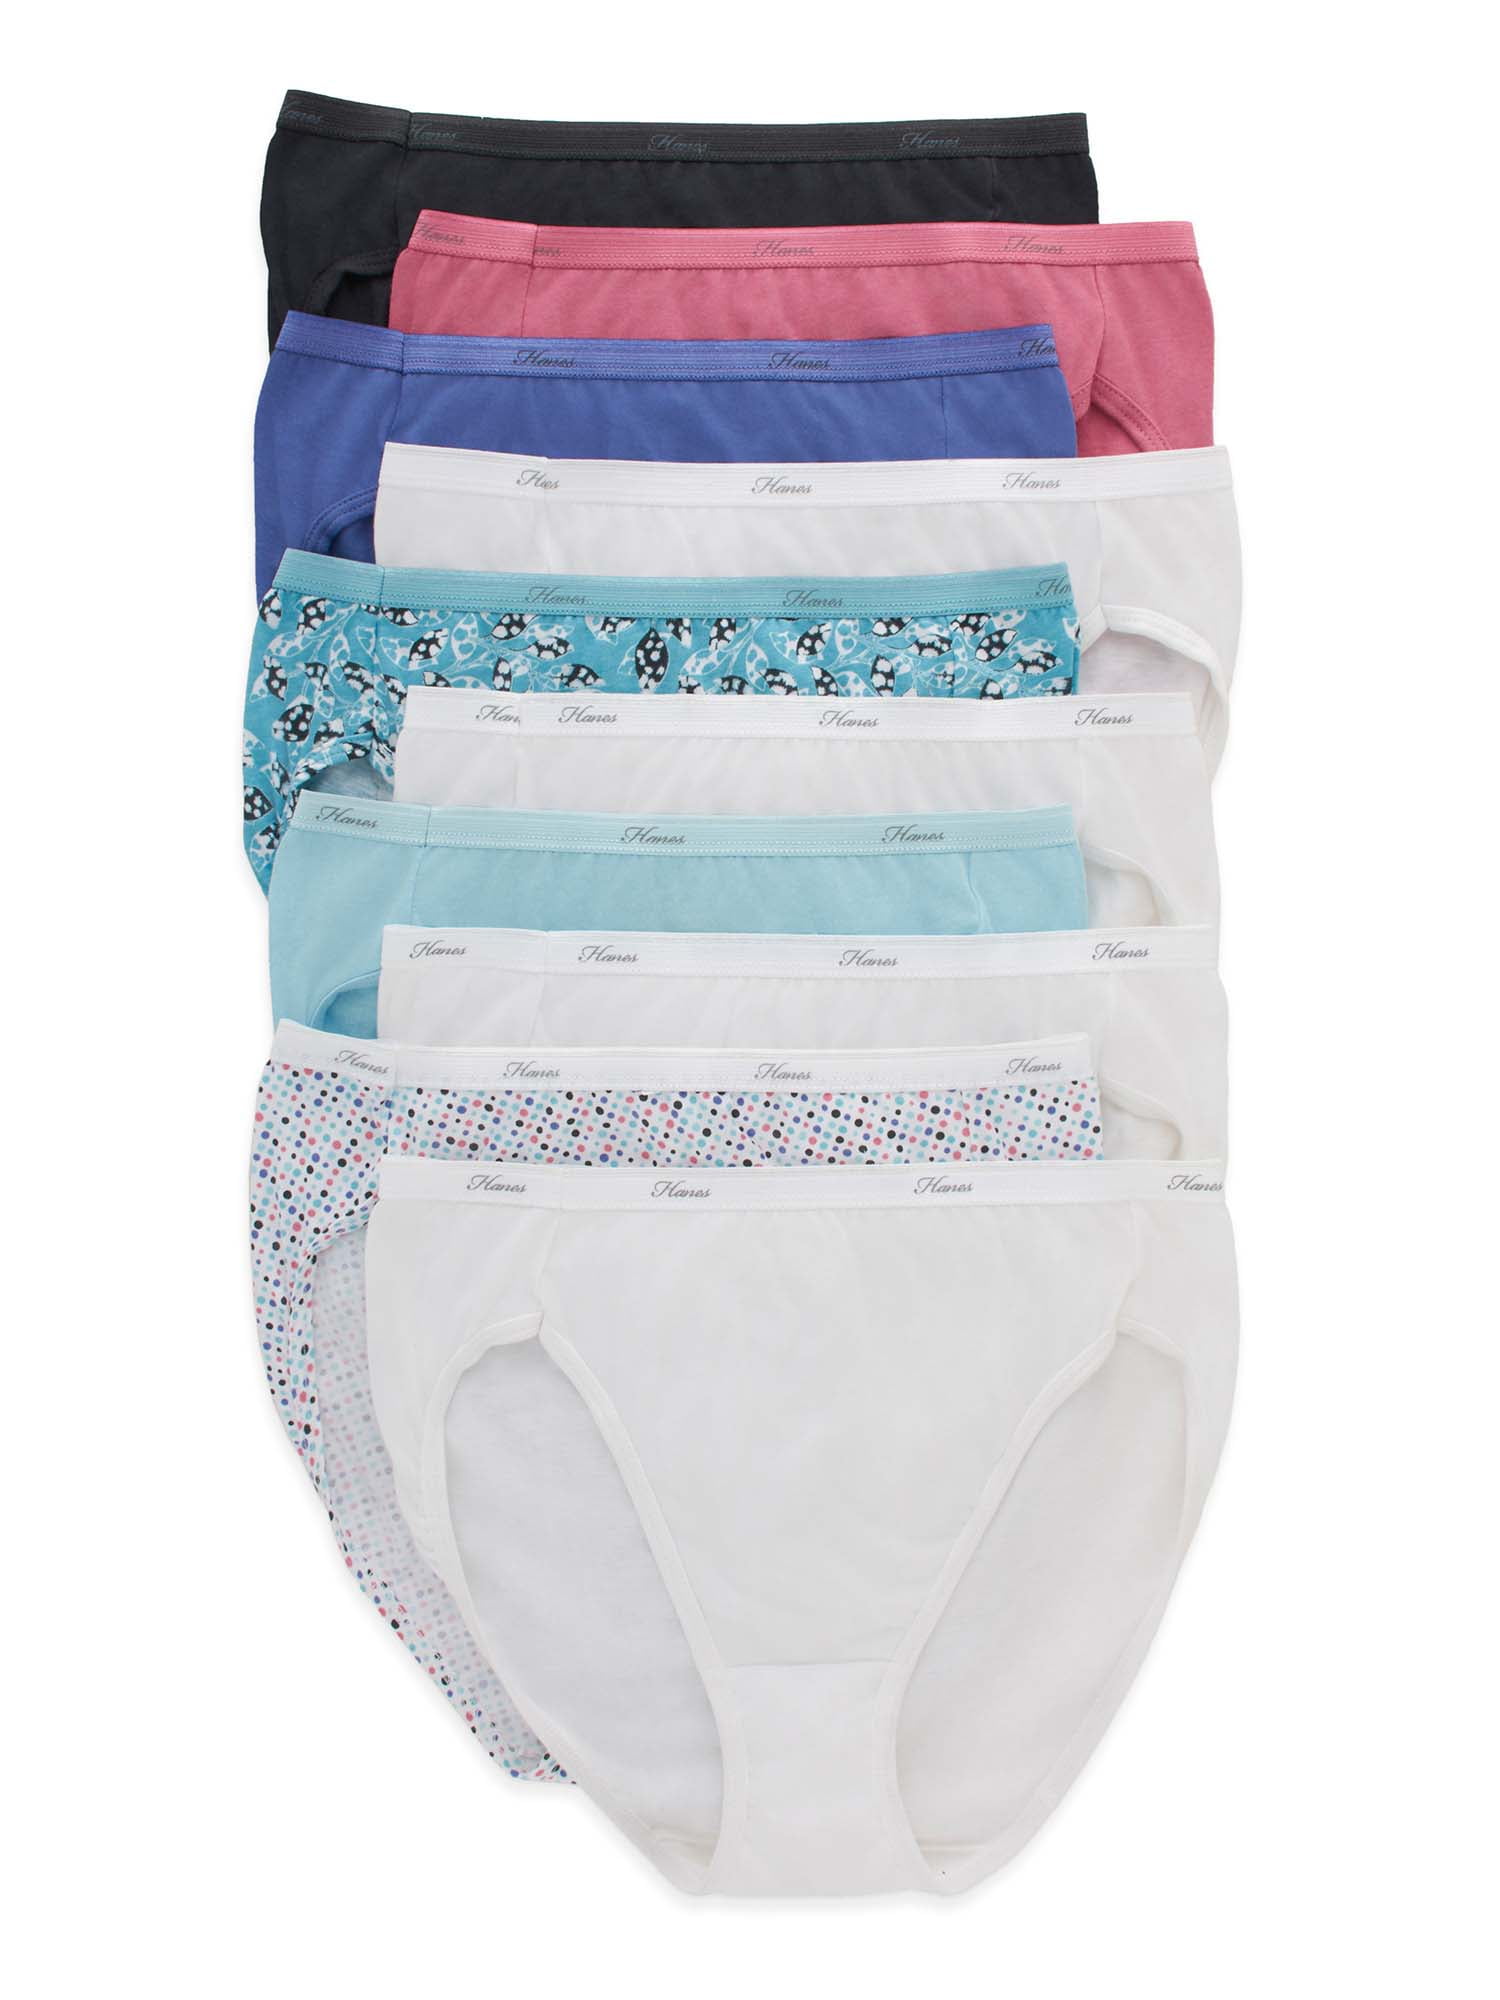 Hanes Girl Briefs Panties Kids Cotton and 21 similar items